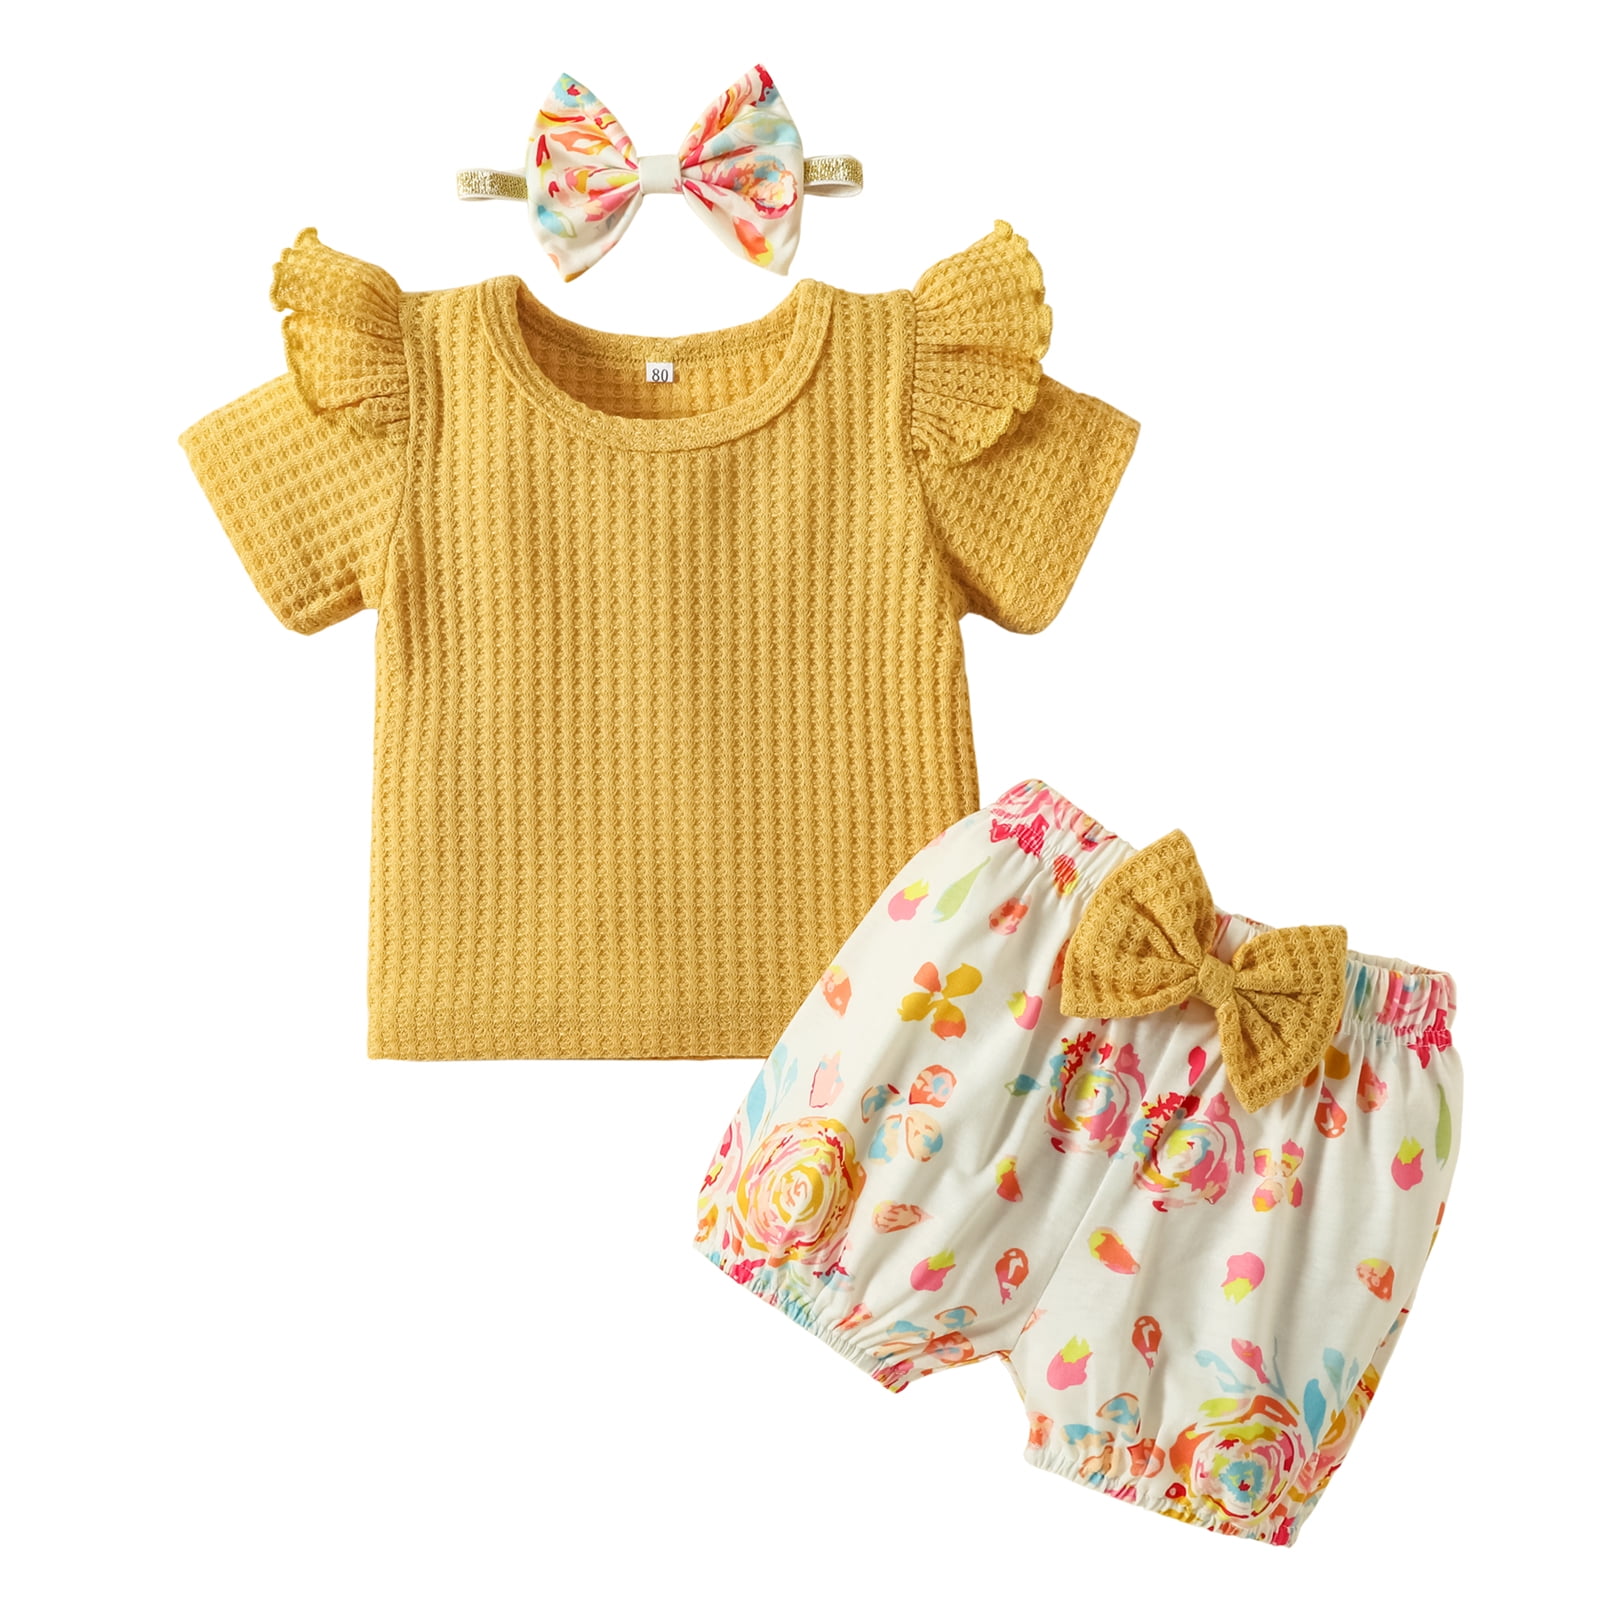 GRNSHTS Toddler Infant Baby Girl Summer Outfits Ruffle Short Sleeve T ...